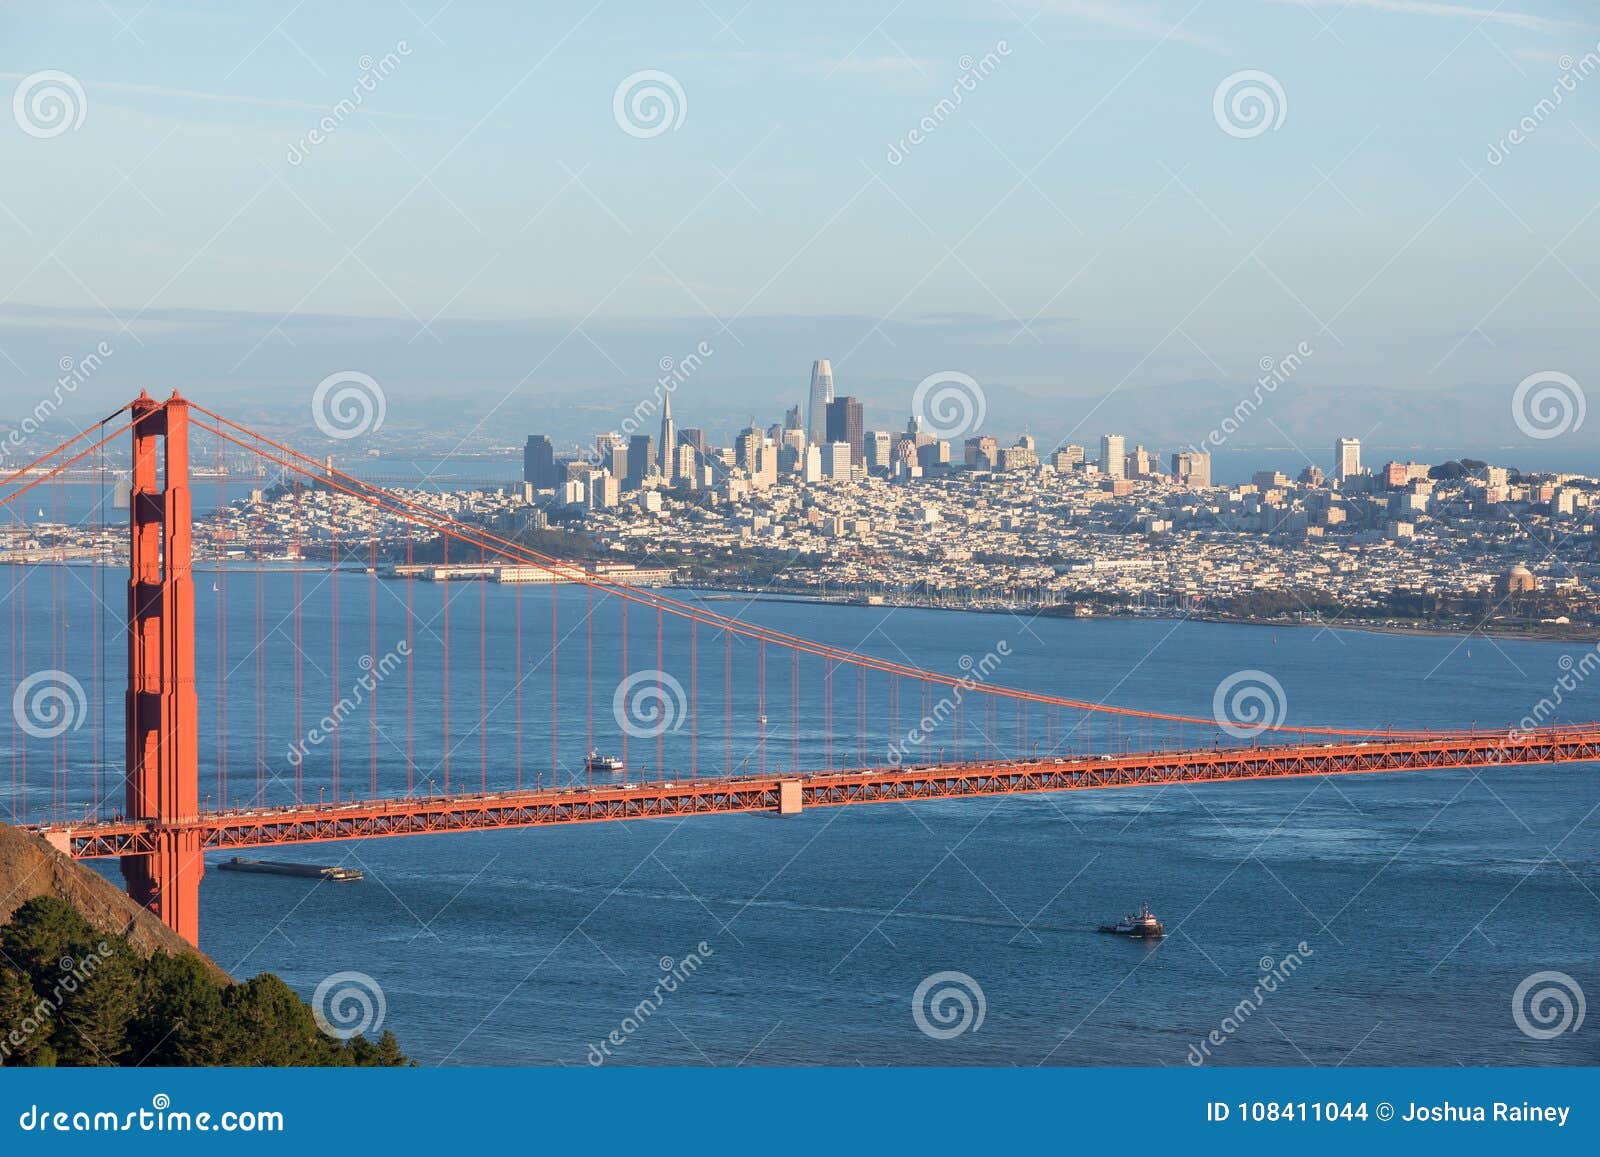 Golden Gate Bride in San Francisco California Editorial Stock Image